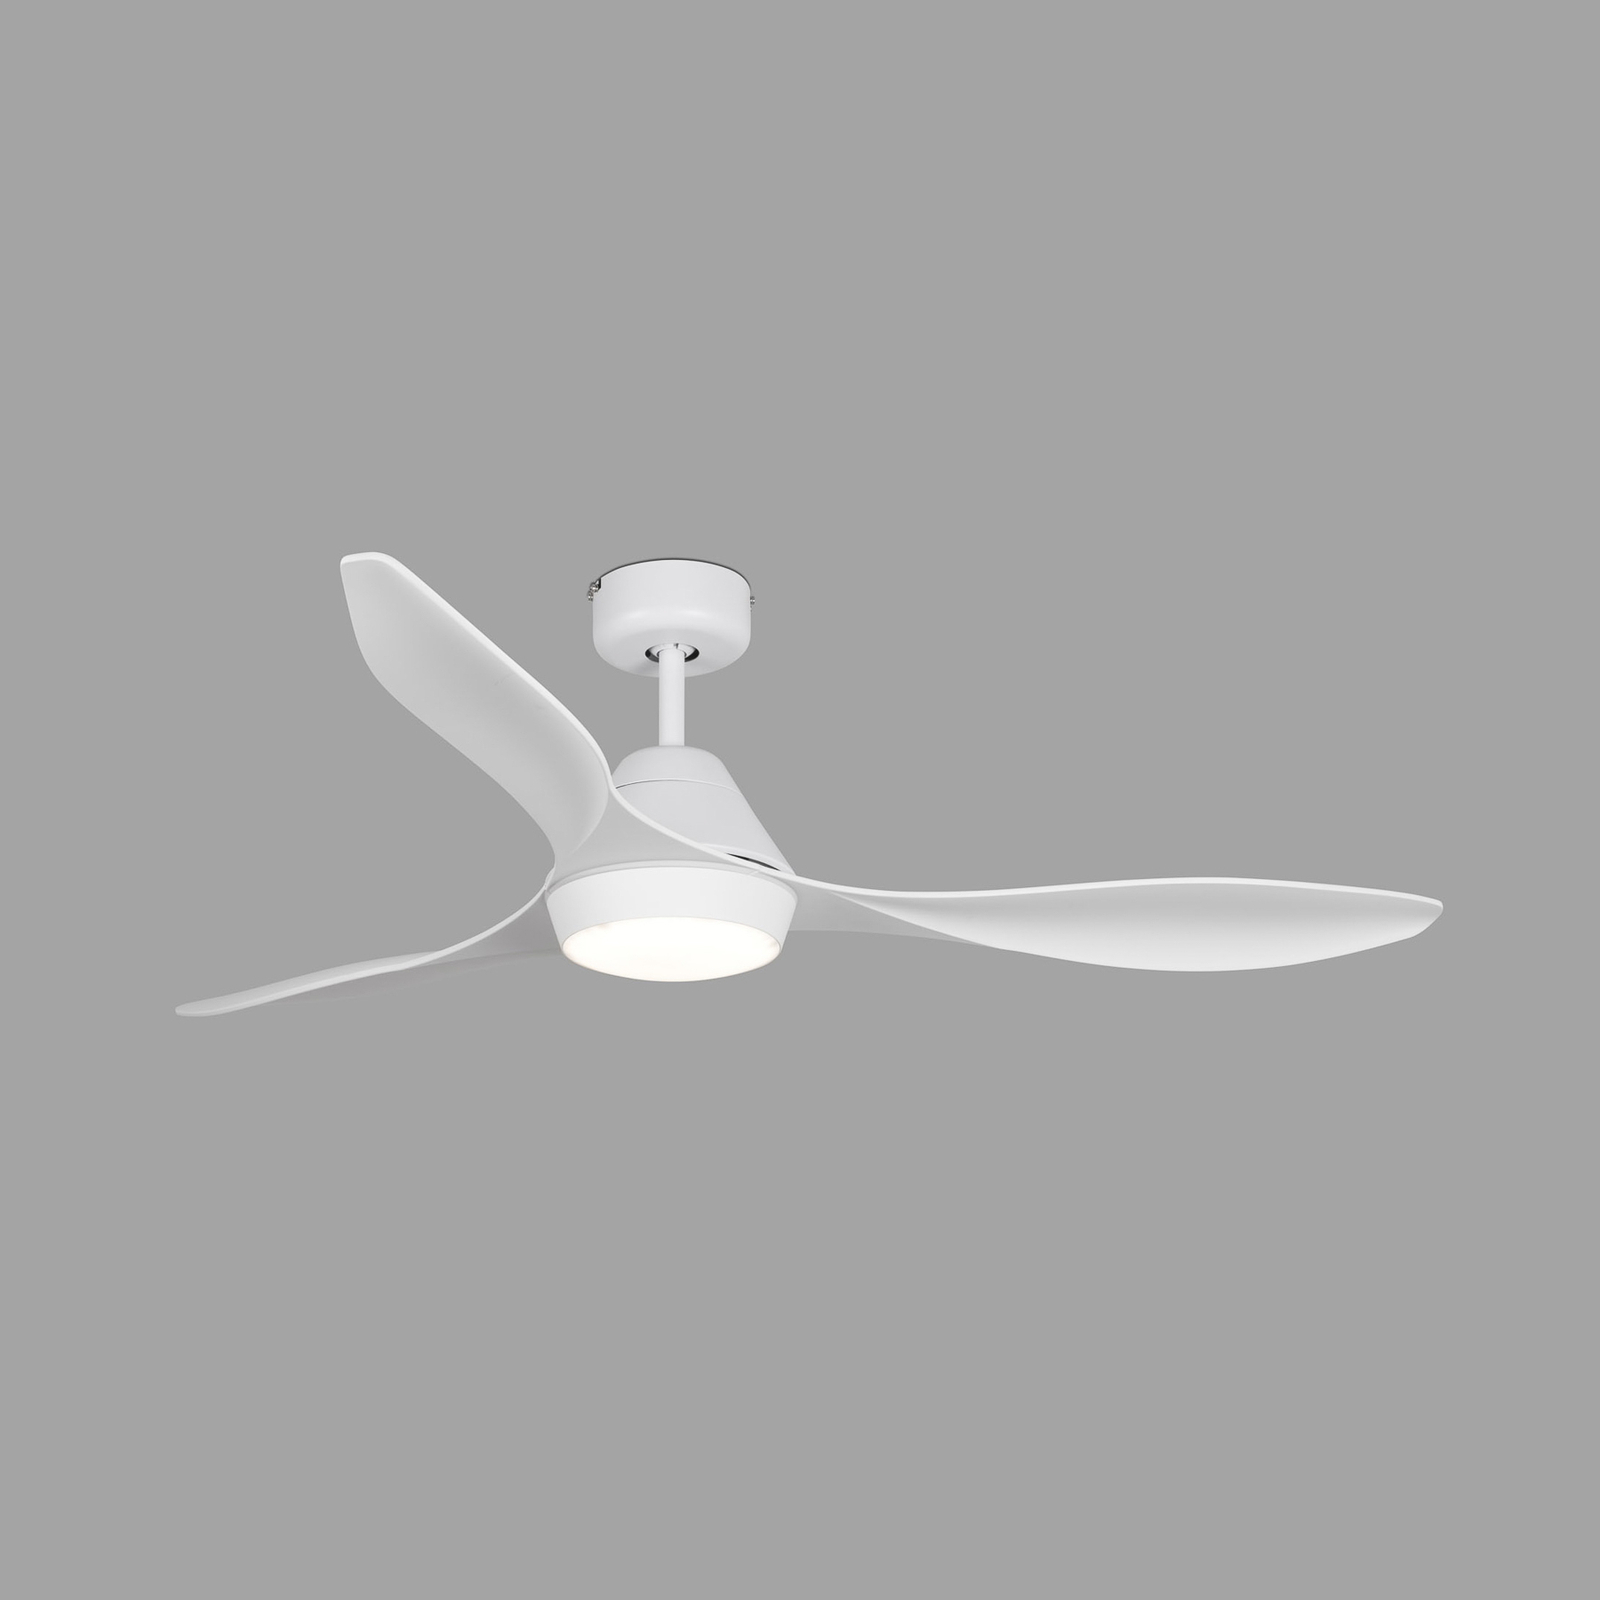 Polaris L LED ceiling fan, 3 blades, white